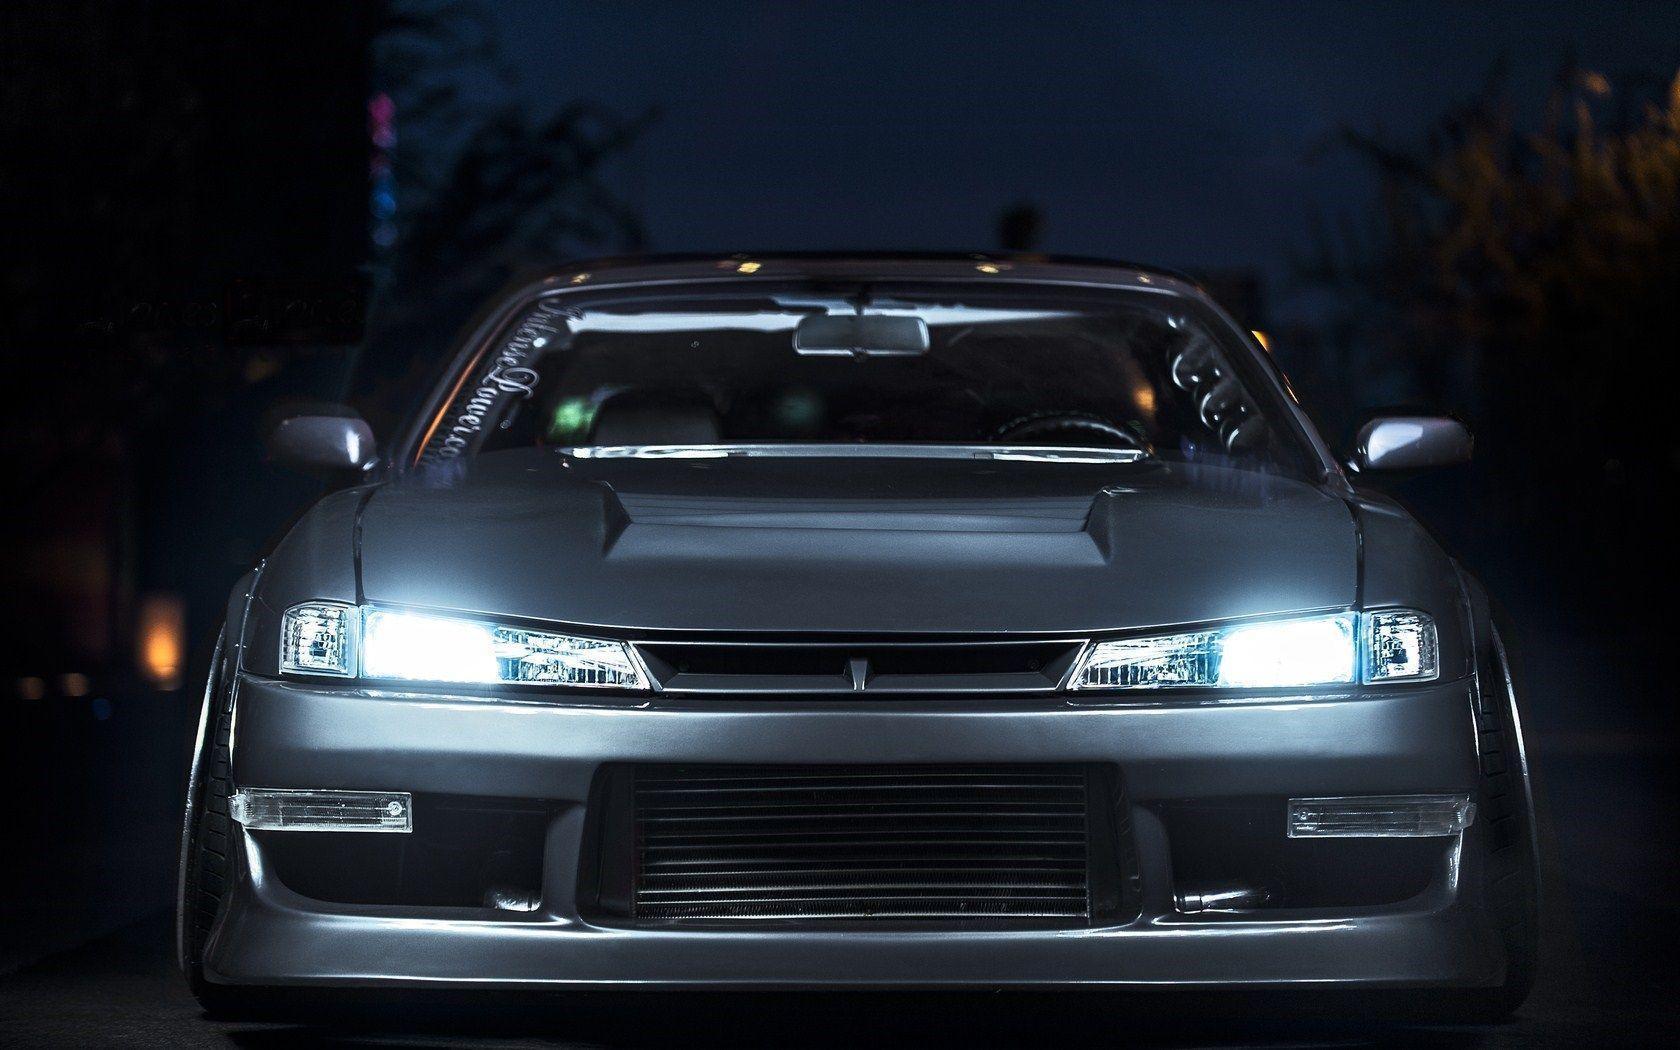 Headlights on Front Nissan Silvia S14 Dark HD Wallpaper